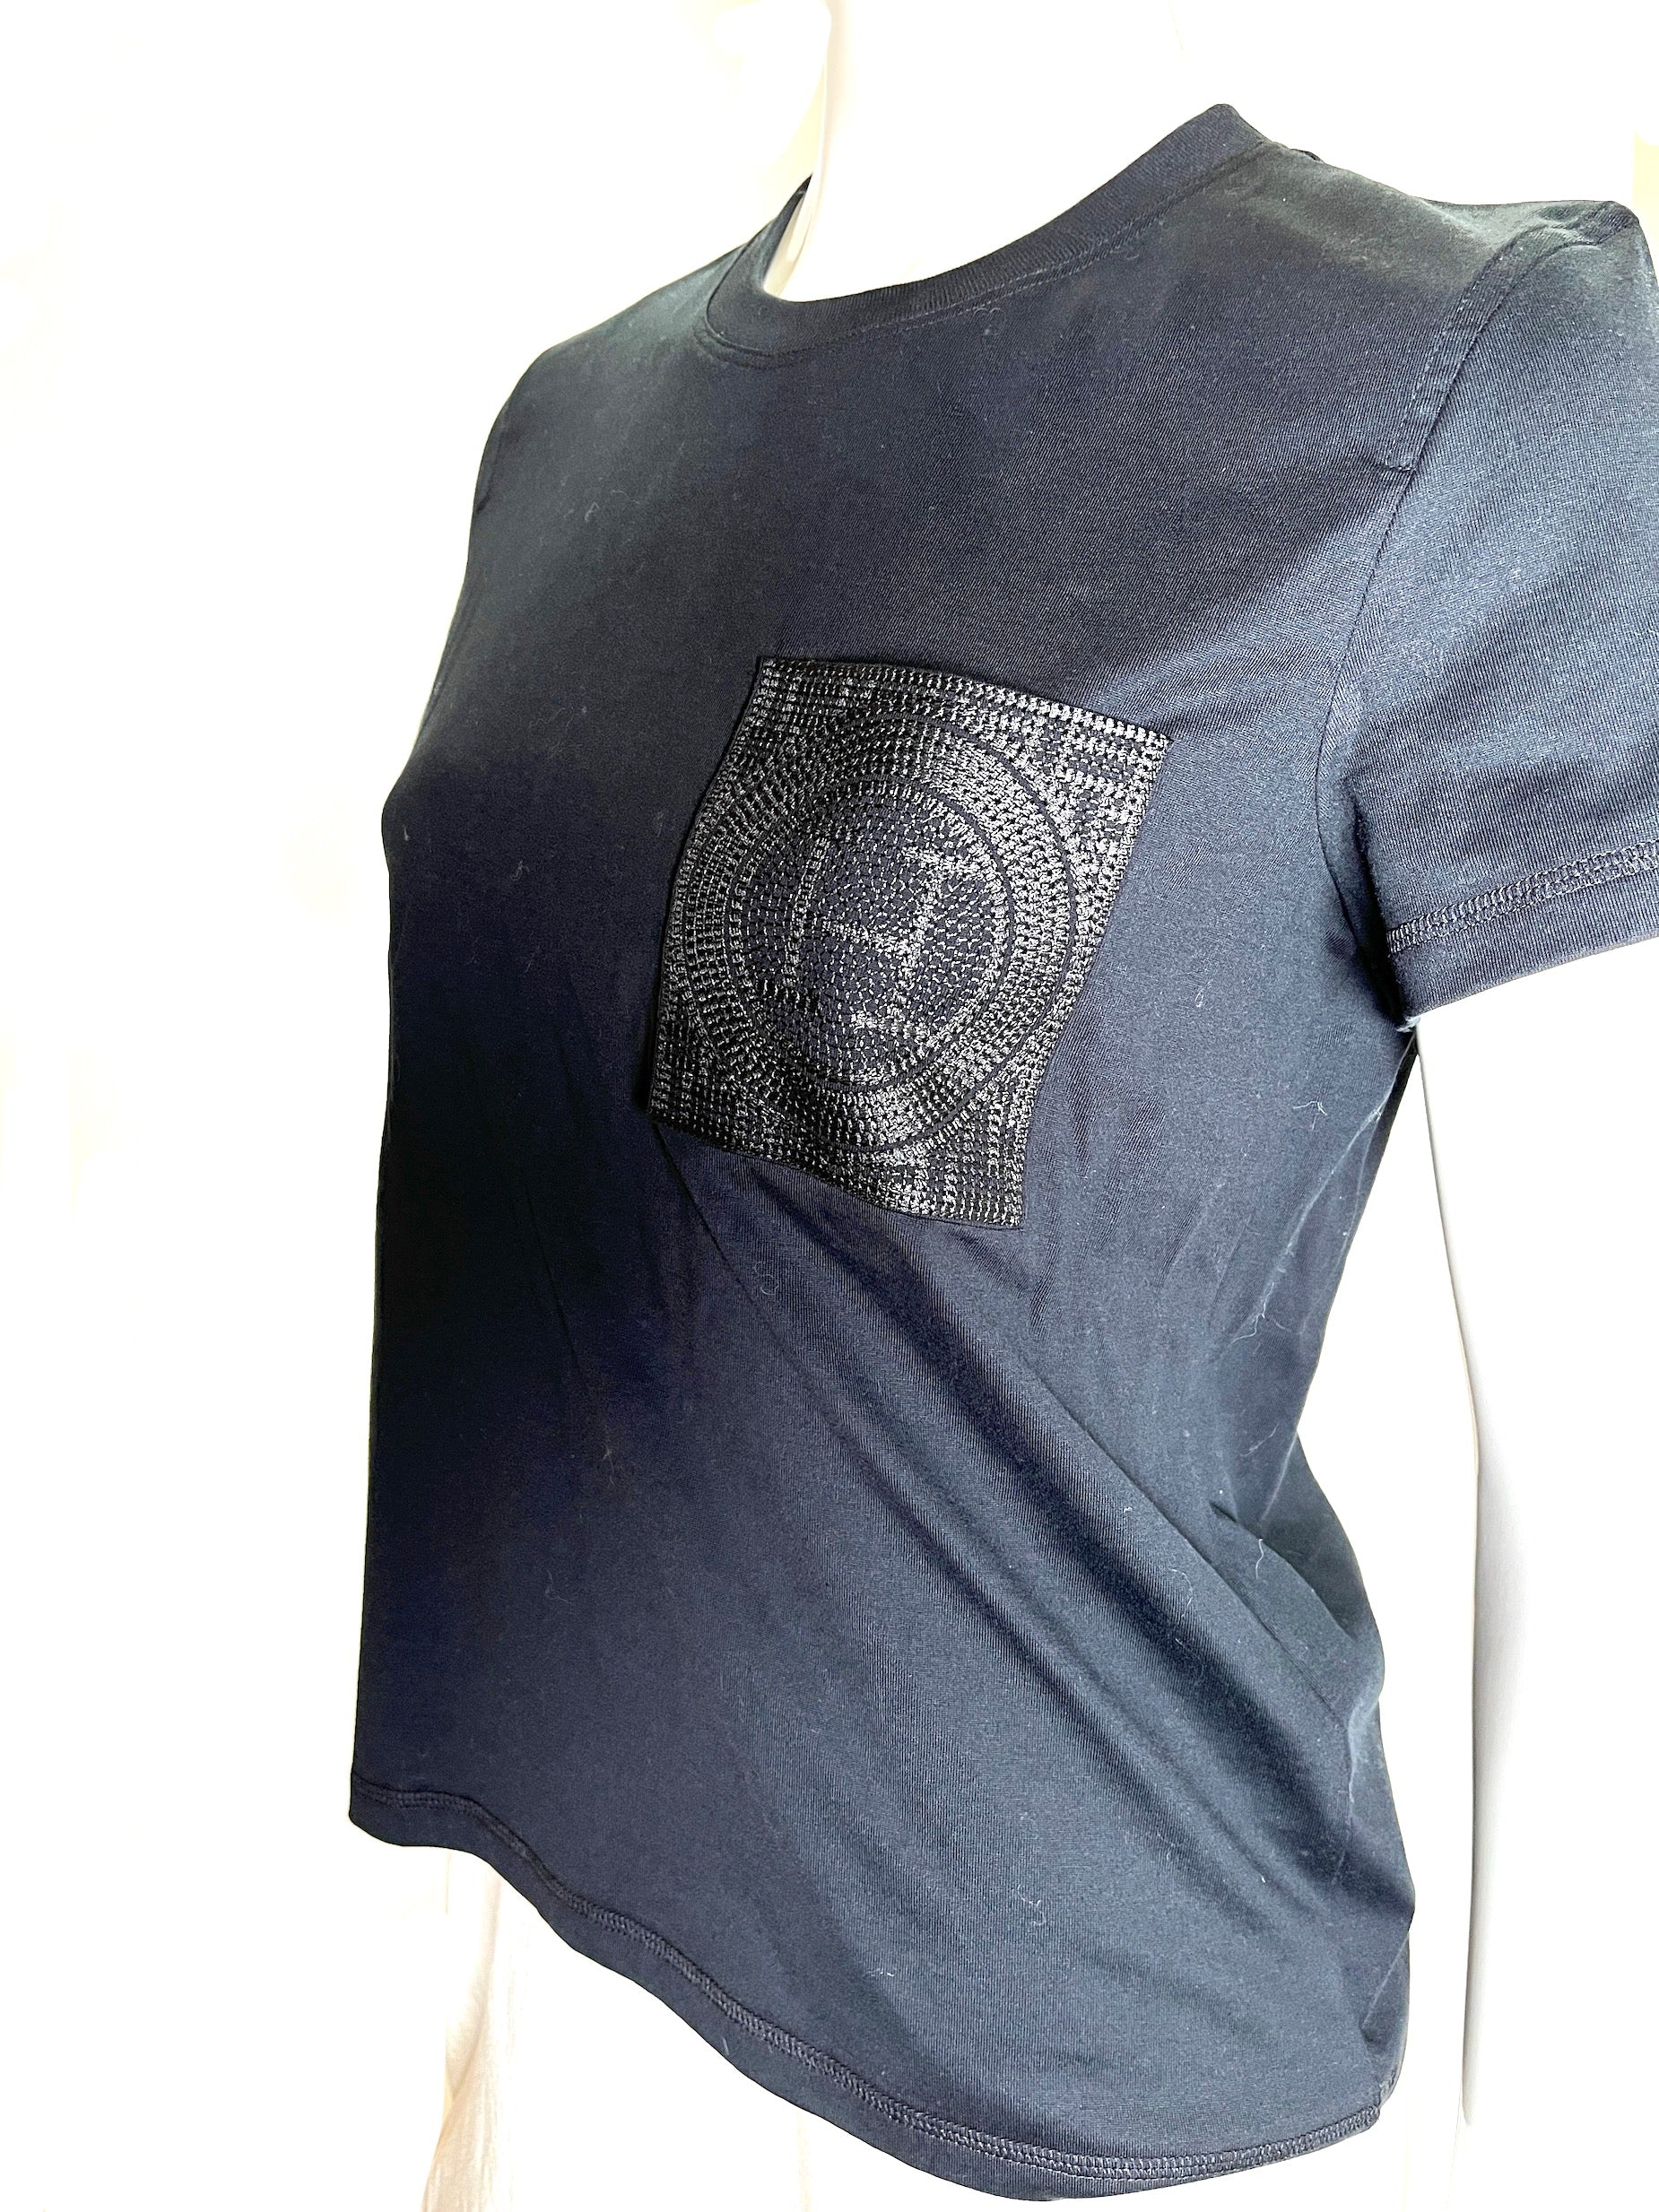 New Hermes Embroidered Pocket Black Cotton T shirt 38 6